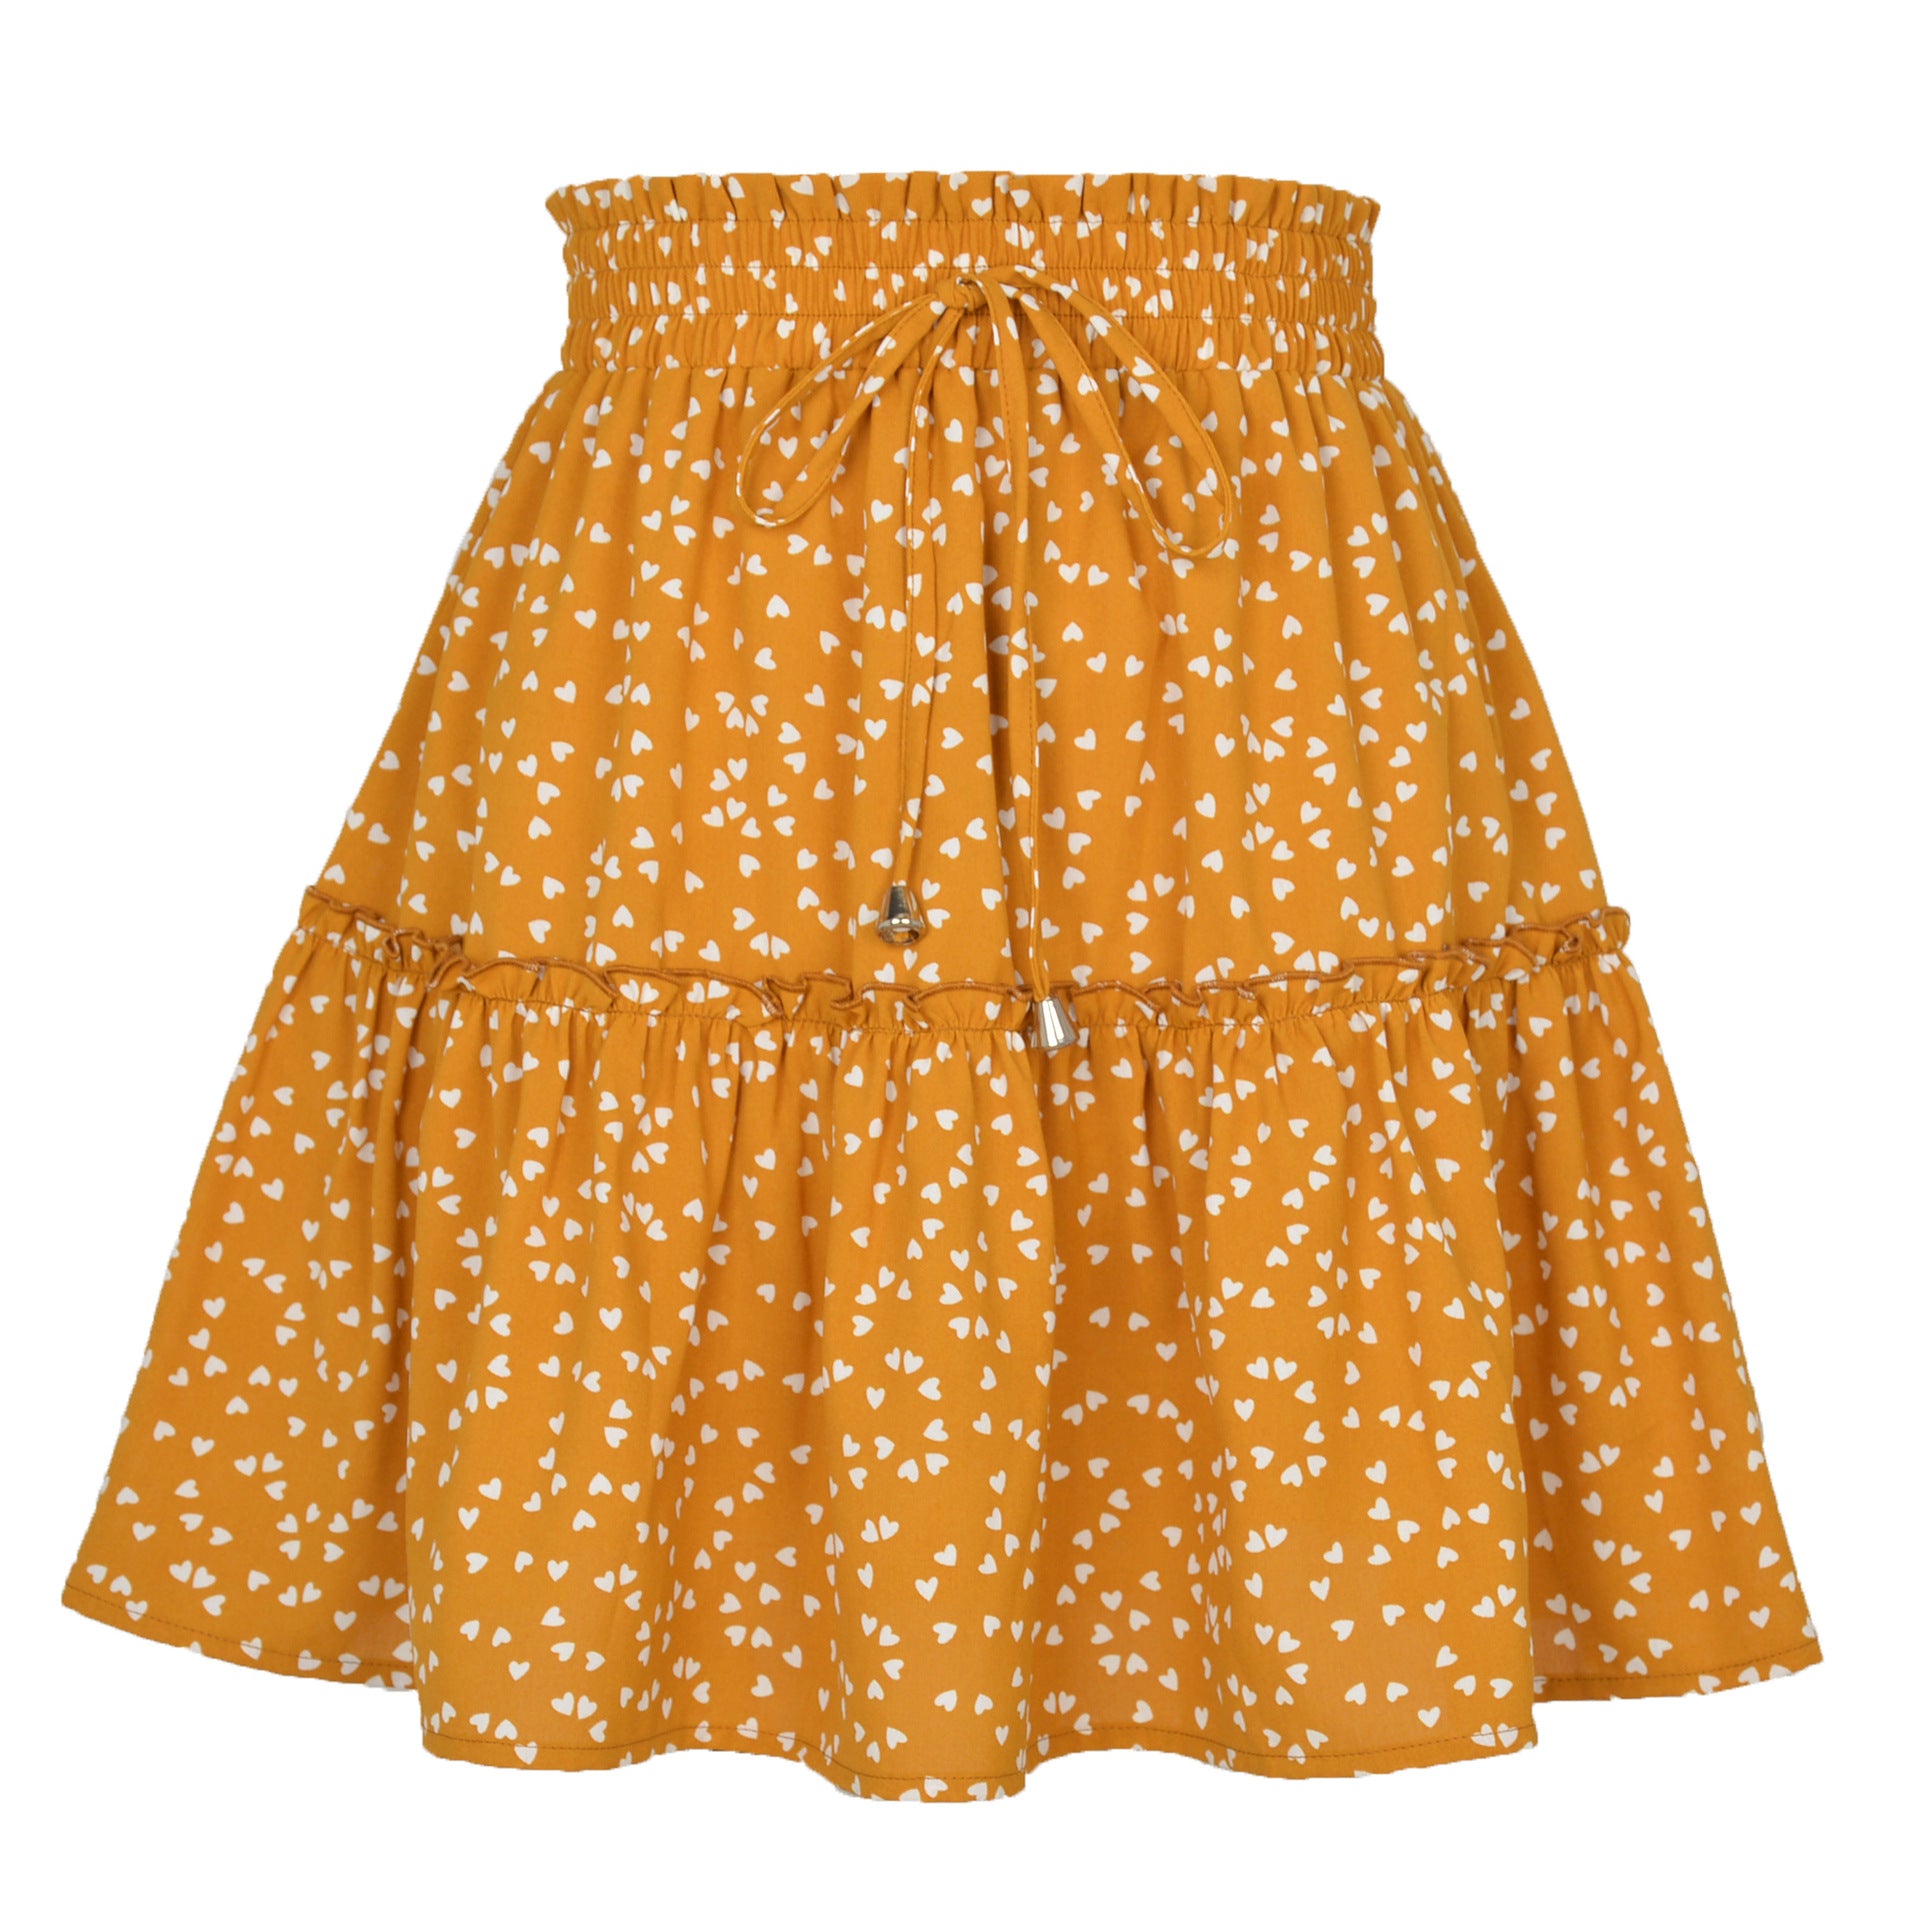 Women's High Waist Fashion Printed Polyester Fiber Small Floral Short Skirt